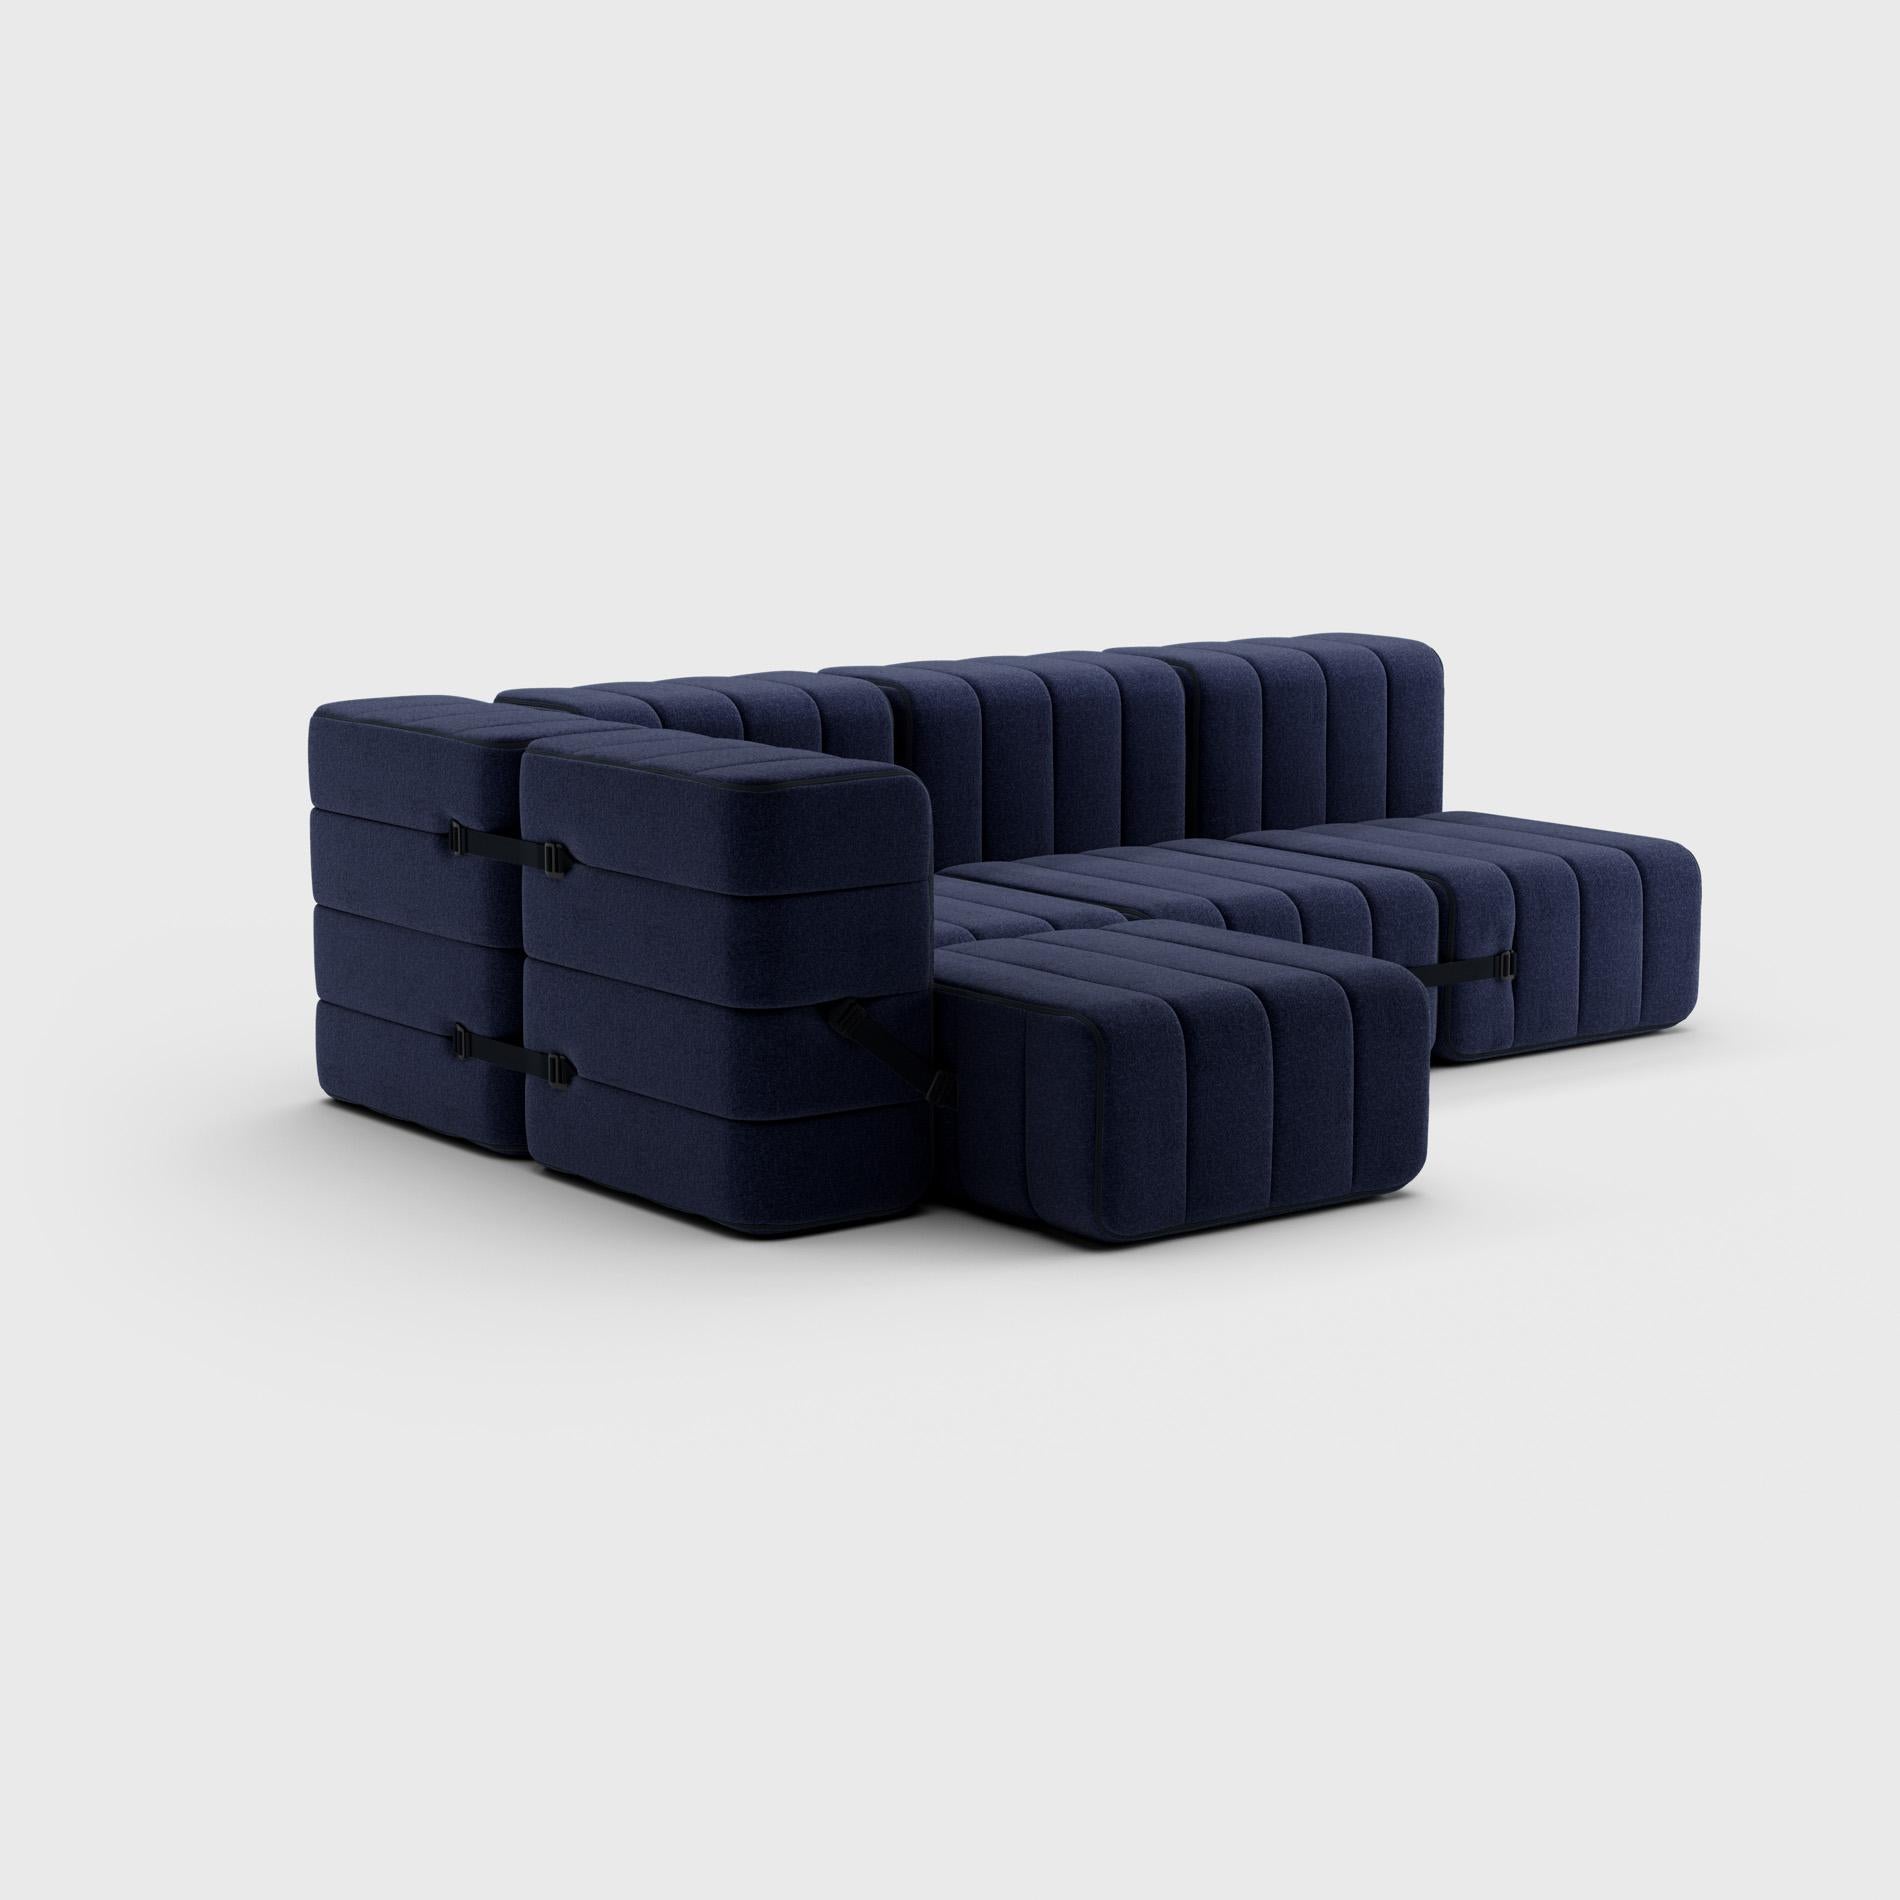 Curt Single Module, Fabric Dama '0048 Dark Blue', Curt Modular Sofa System In New Condition For Sale In Berlin, BE